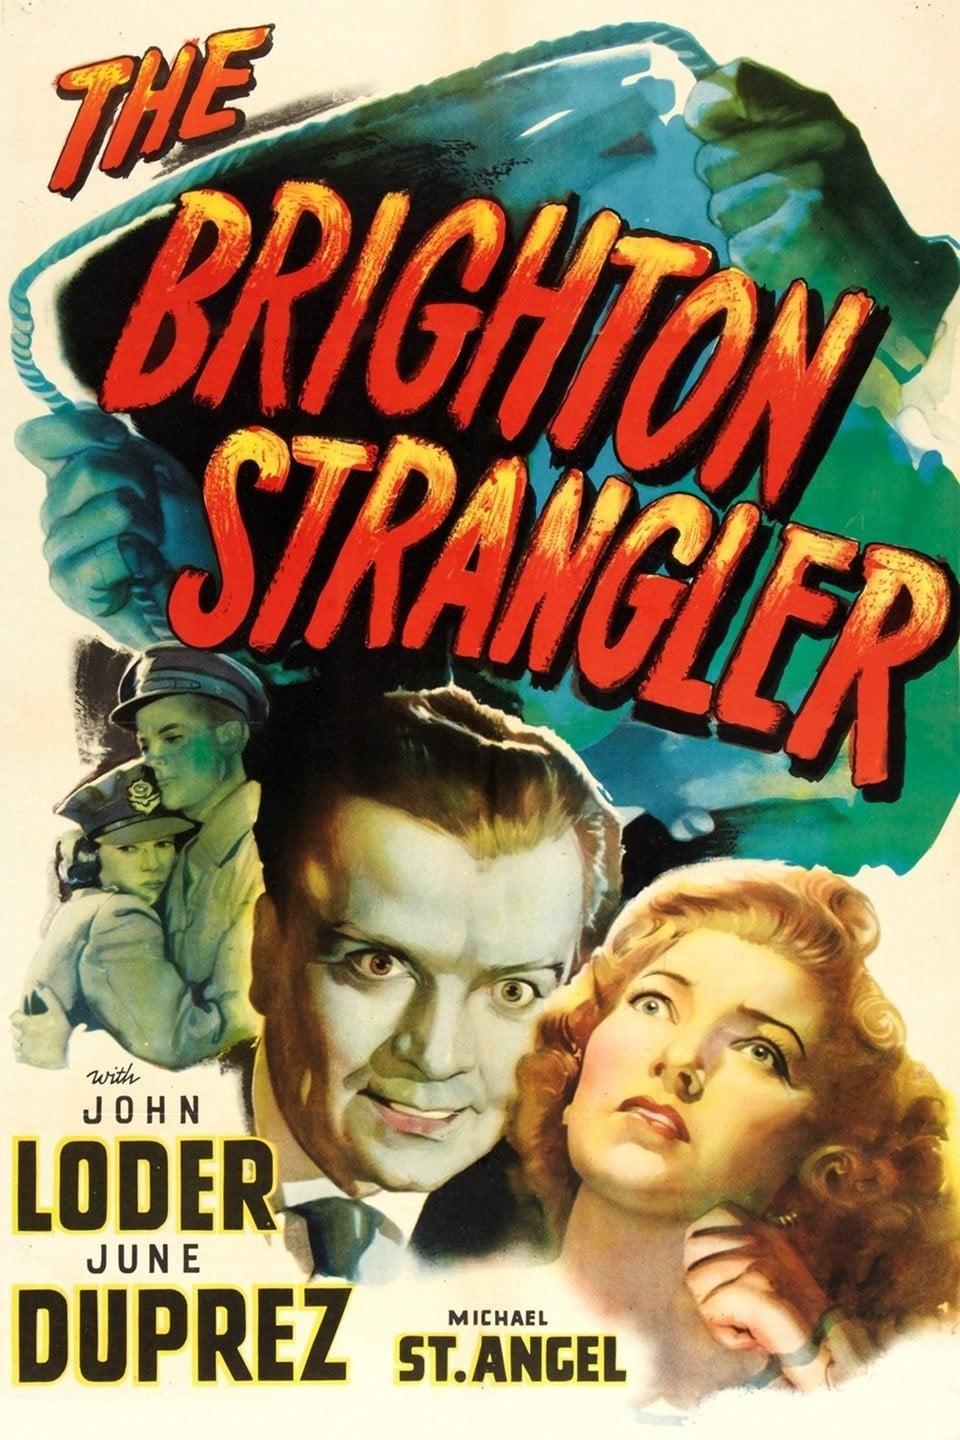 The Brighton Strangler poster